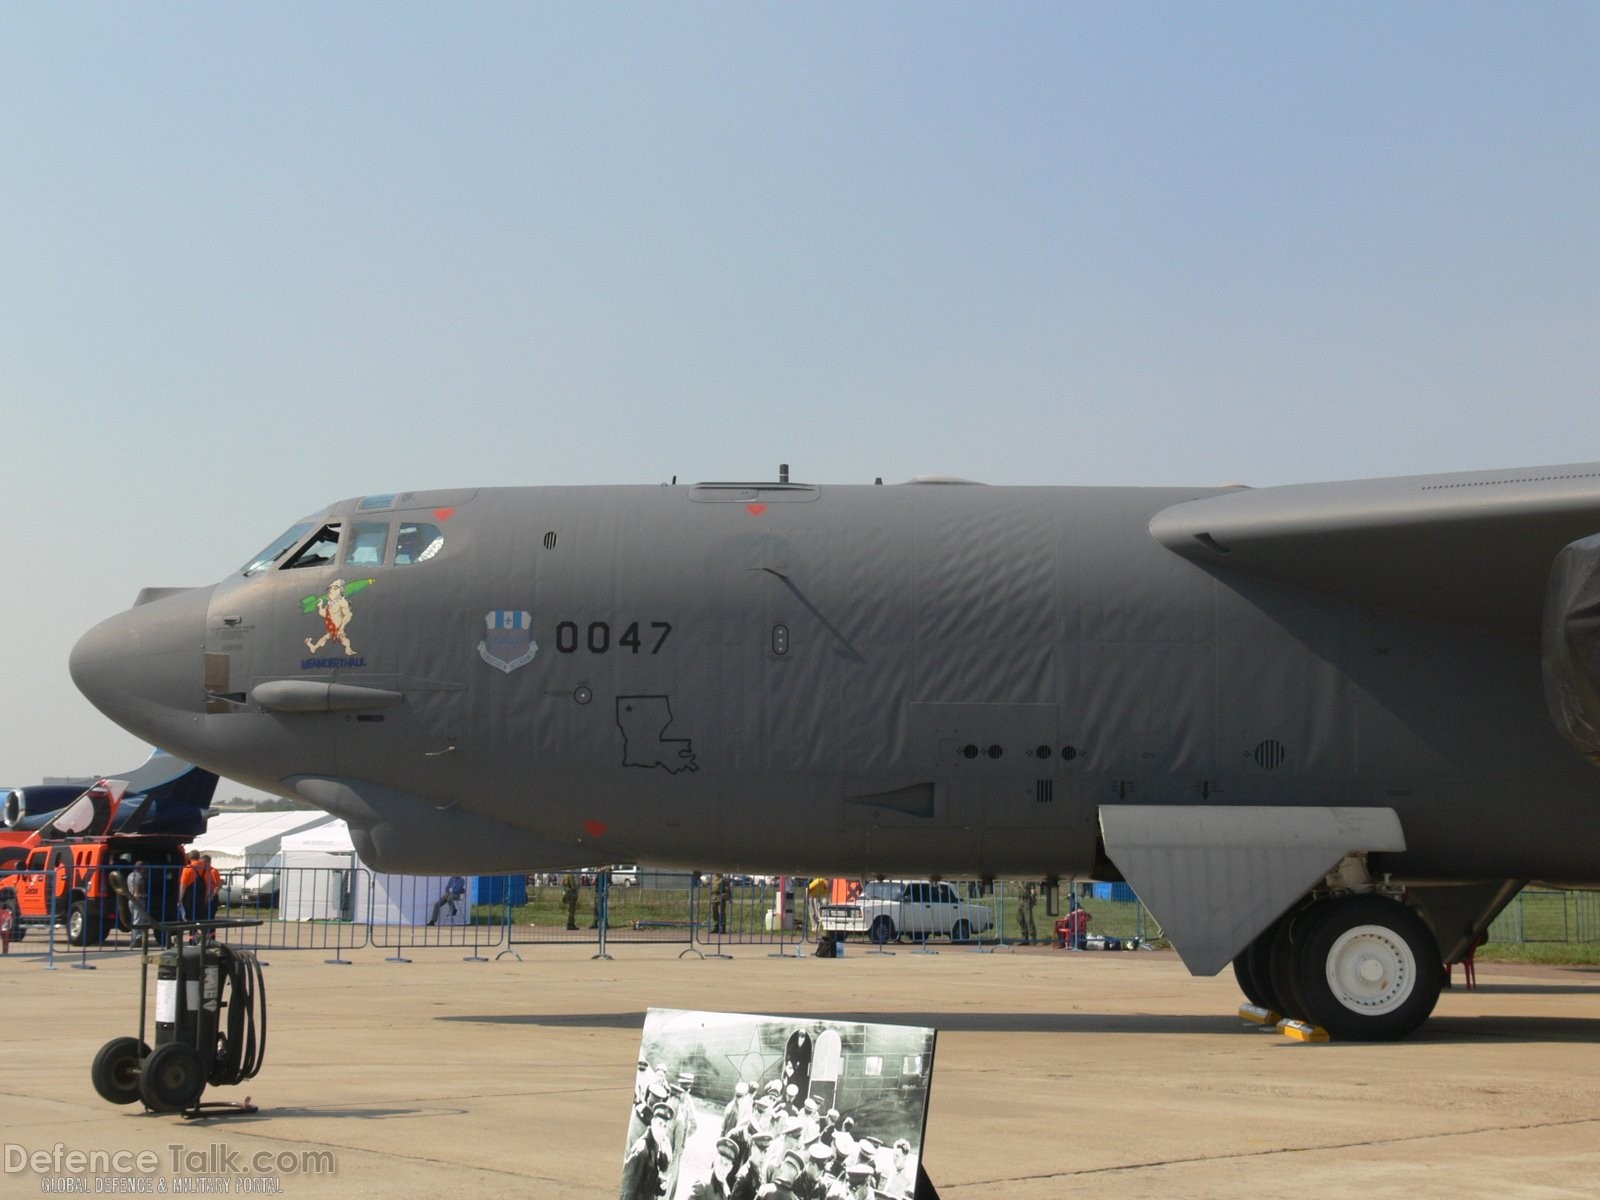 B-52 Bomber, USAF - MAKS 2007 Air Show